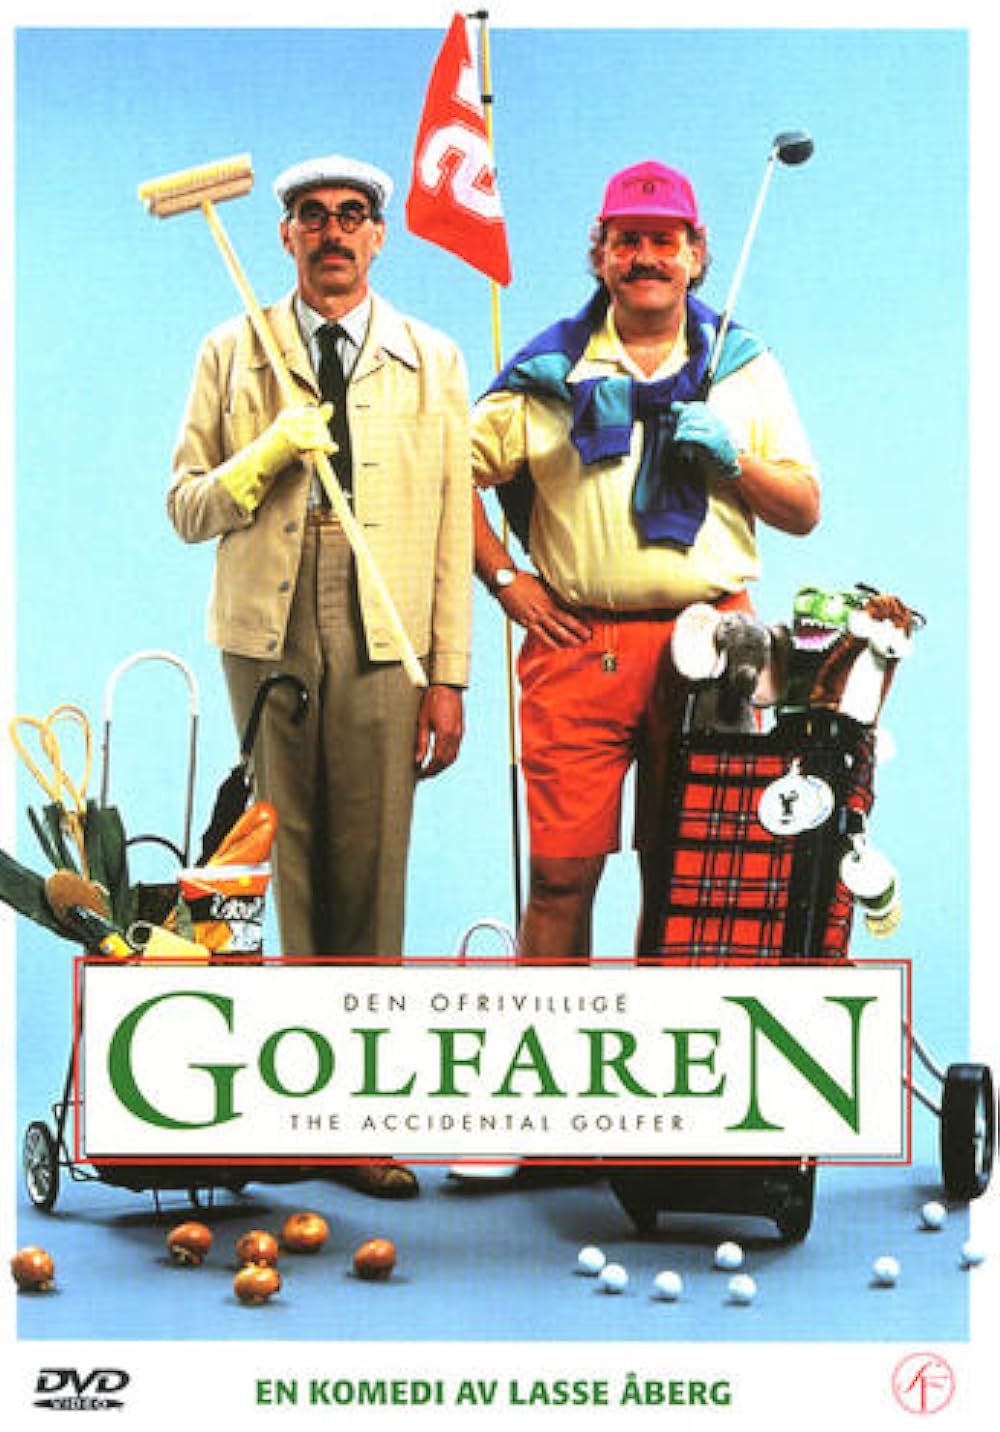 Photo: golf bet movie